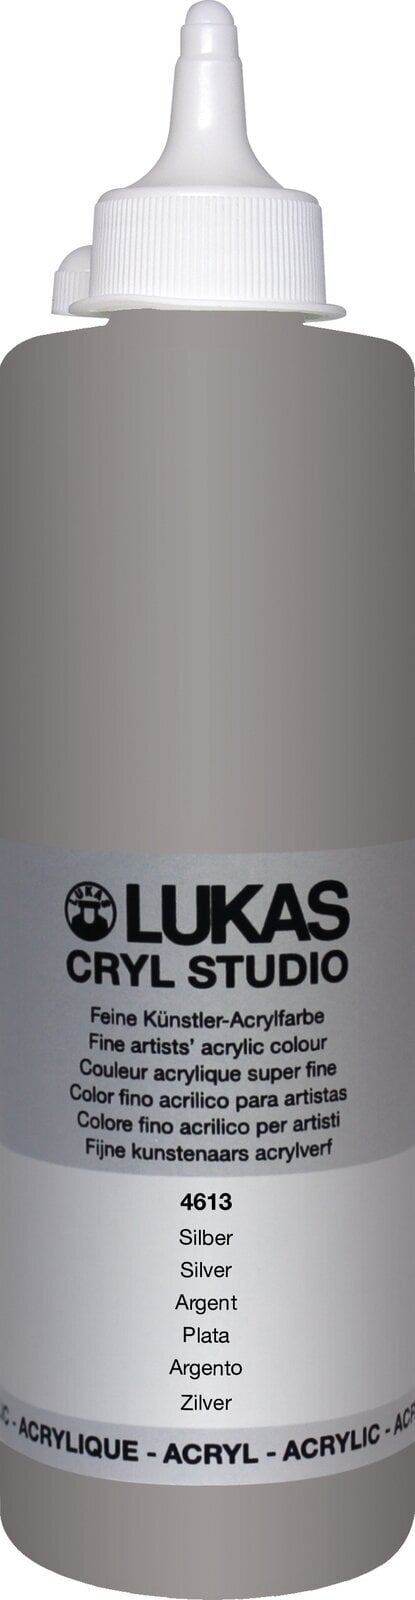 Akrylová farba Lukas Cryl Studio Acrylic Paint Plastic Bottle Akrylová farba Silver 500 ml 1 ks